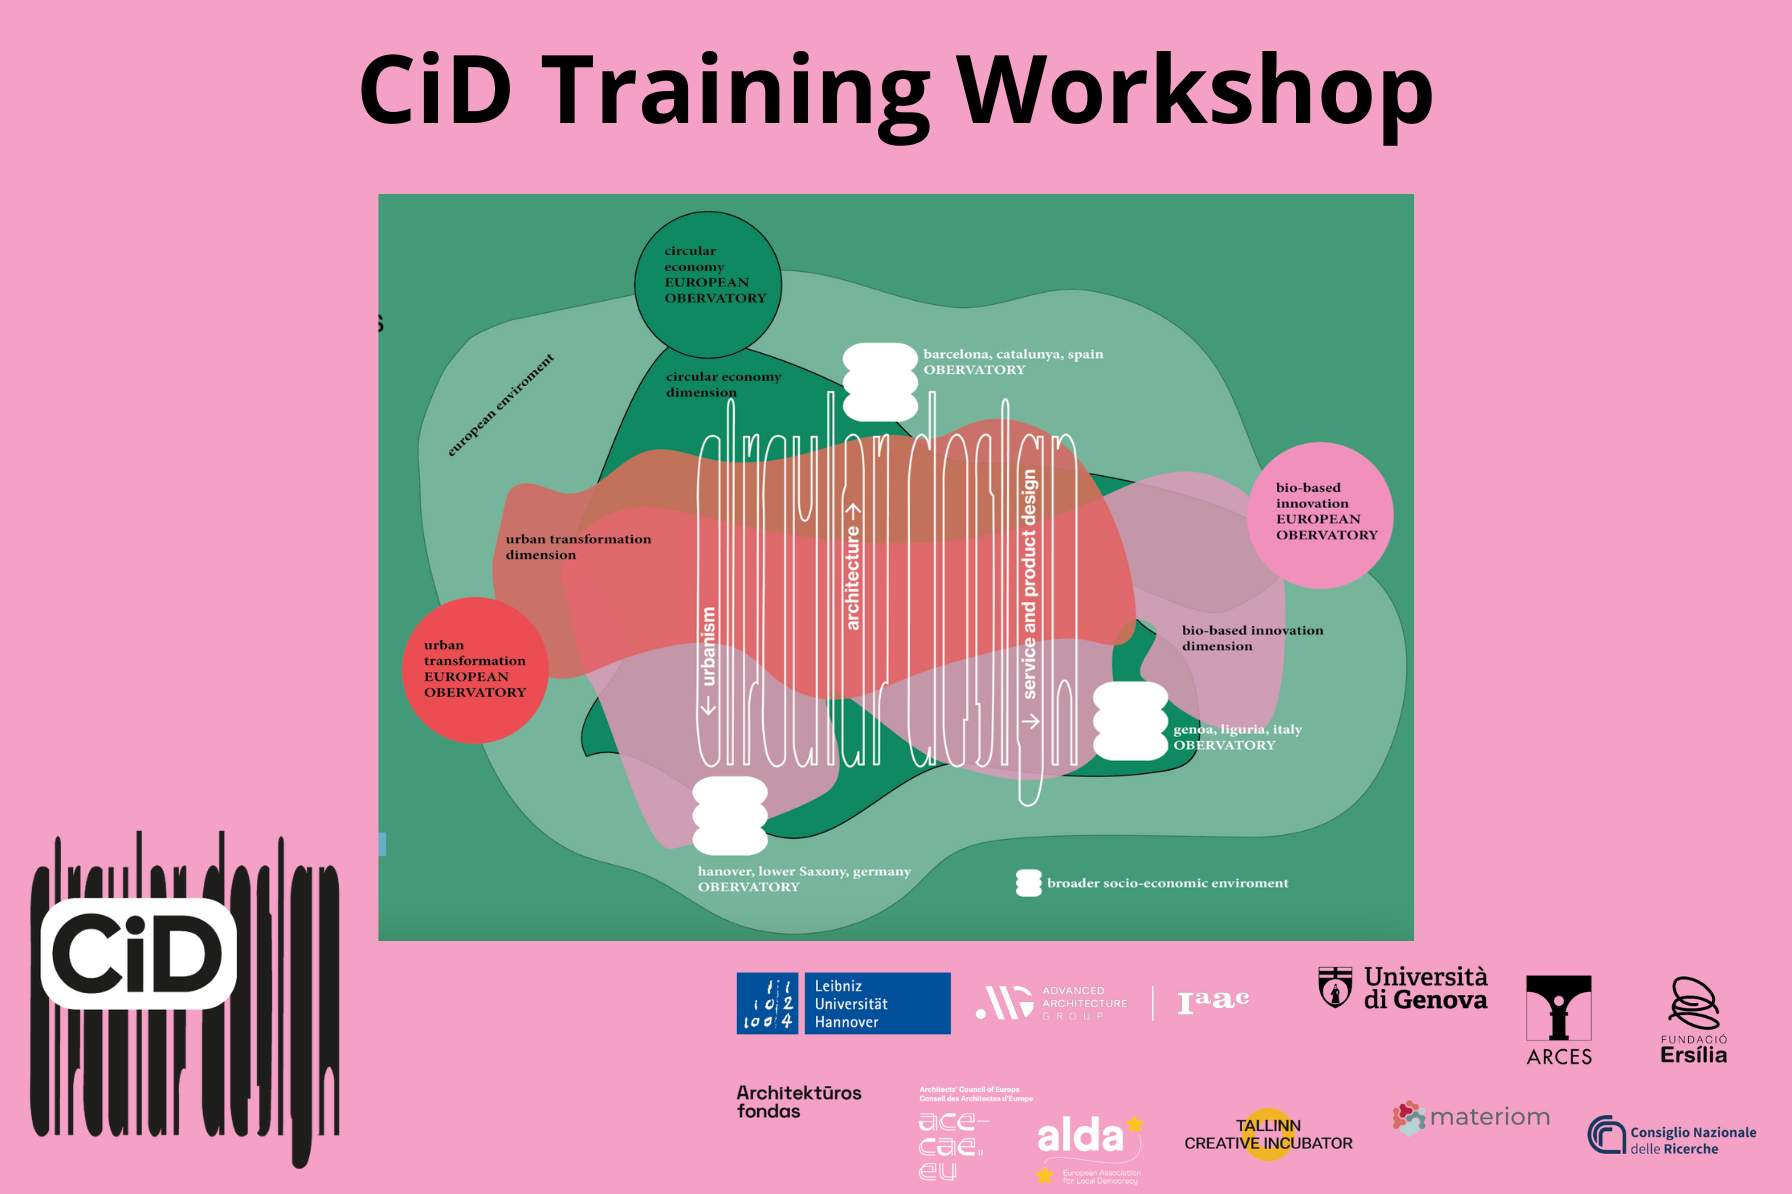 CiD Training Workshop